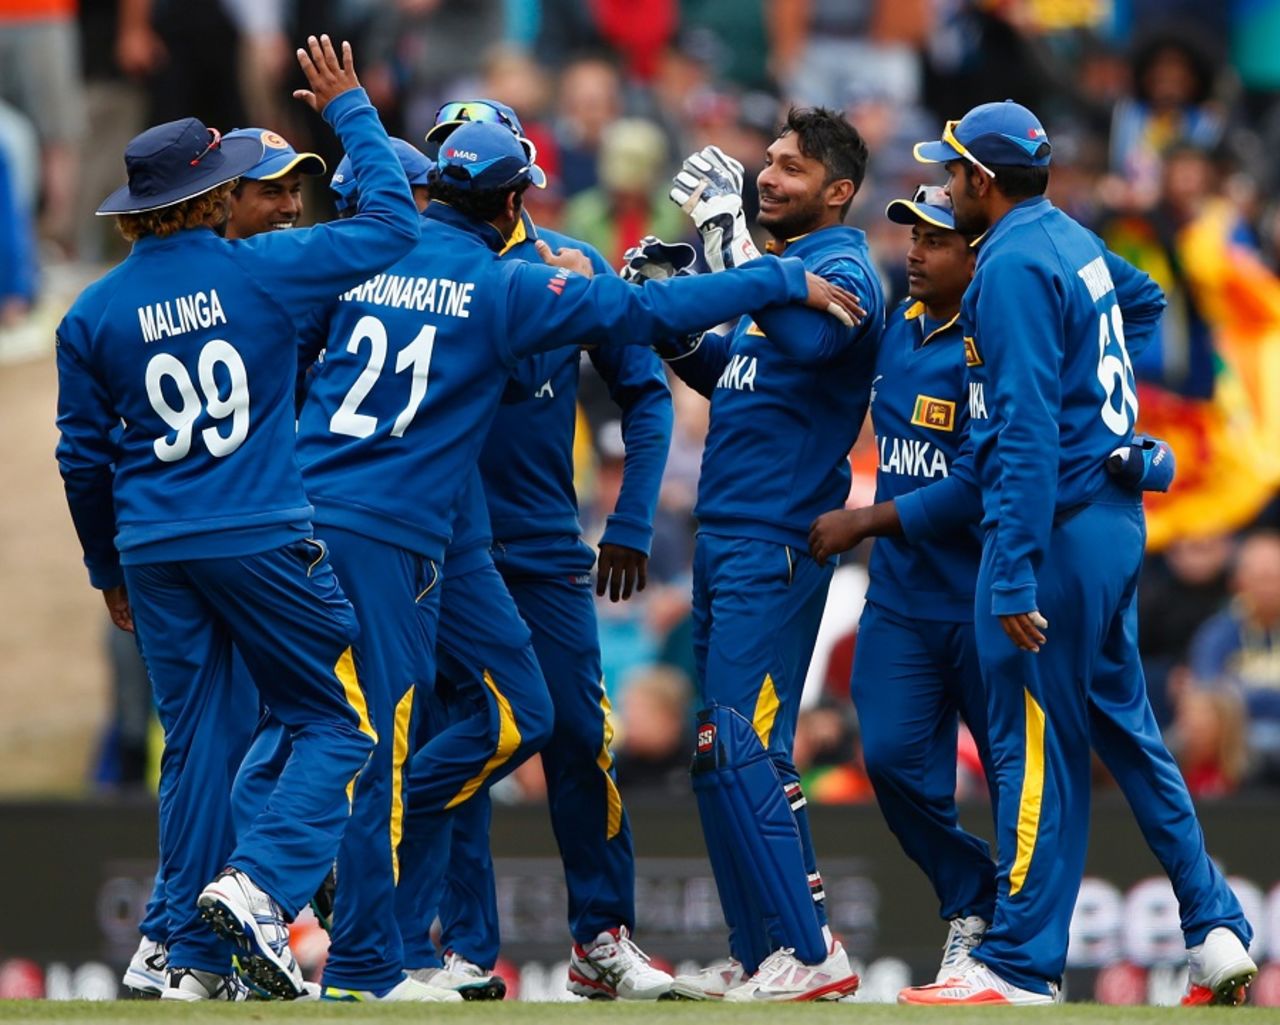 Kumar Sangakkara is congratulated by his team-mates after taking a catch, New Zealand v Sri Lanka, Group A, World Cup 2015, Christchurch, February 14, 2015